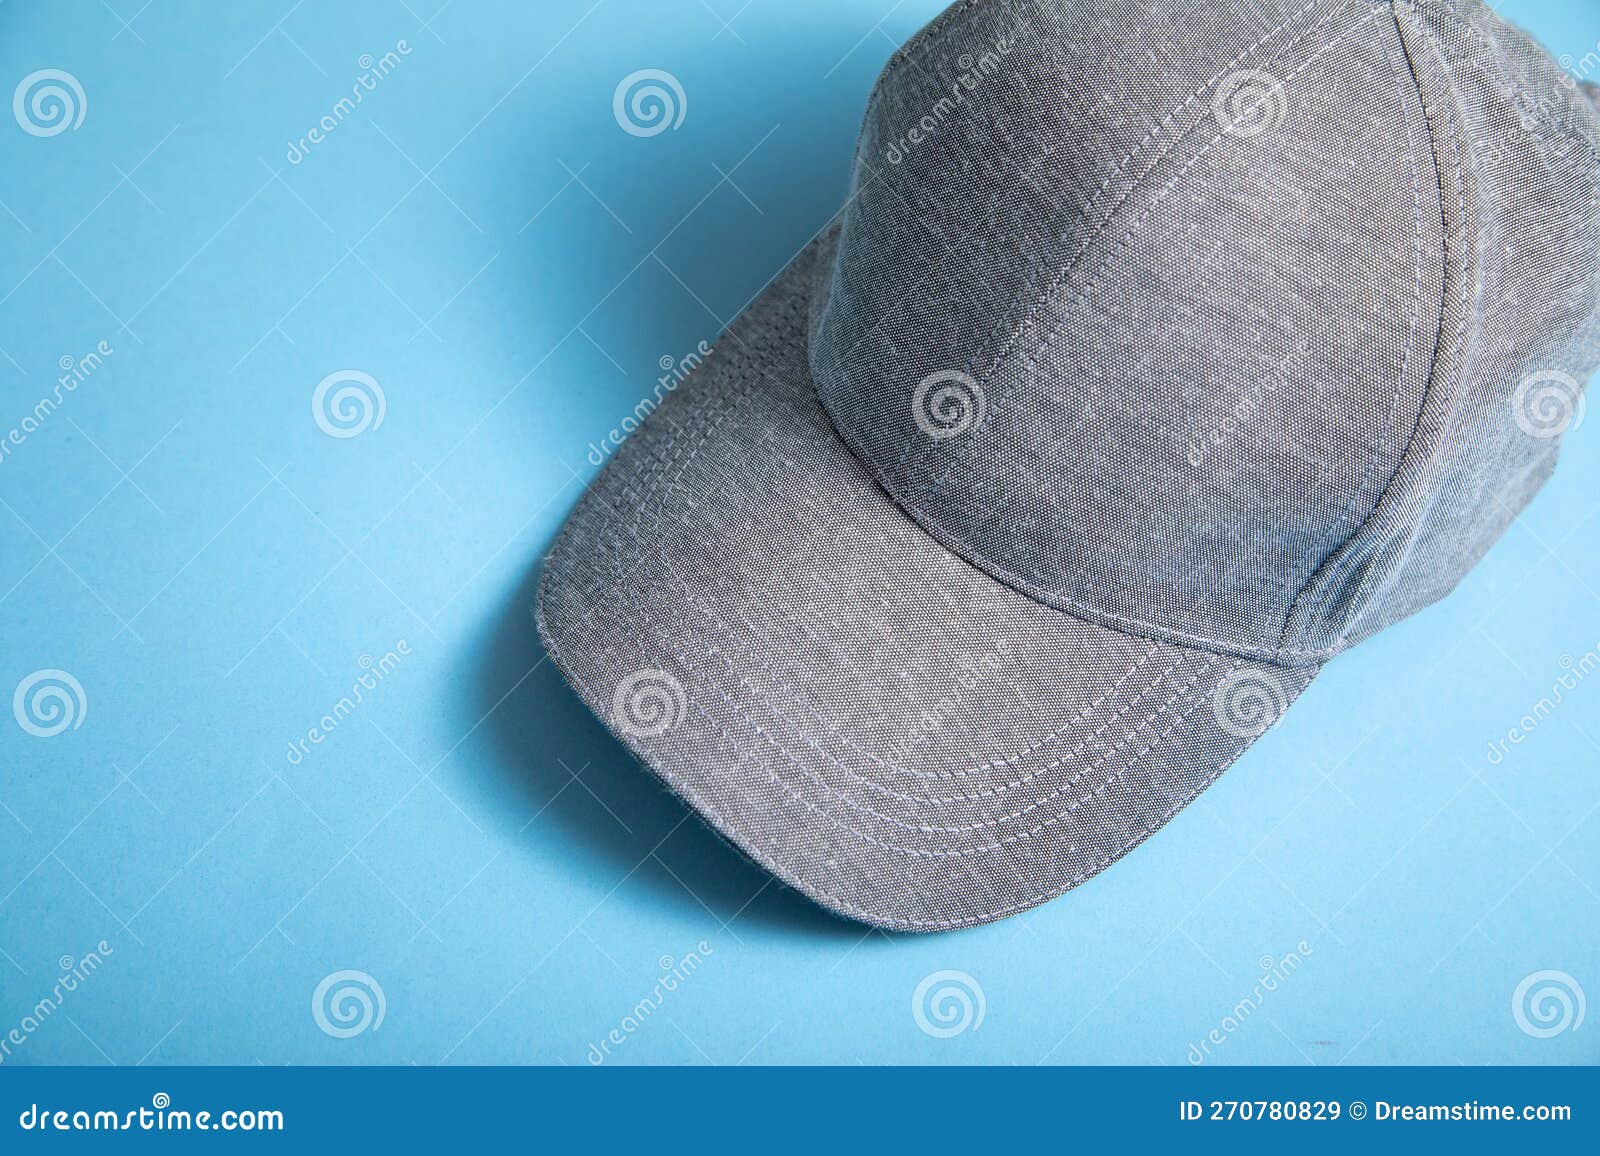 Baseball Cap on the Blue Background Stock Image - Image of wear ...